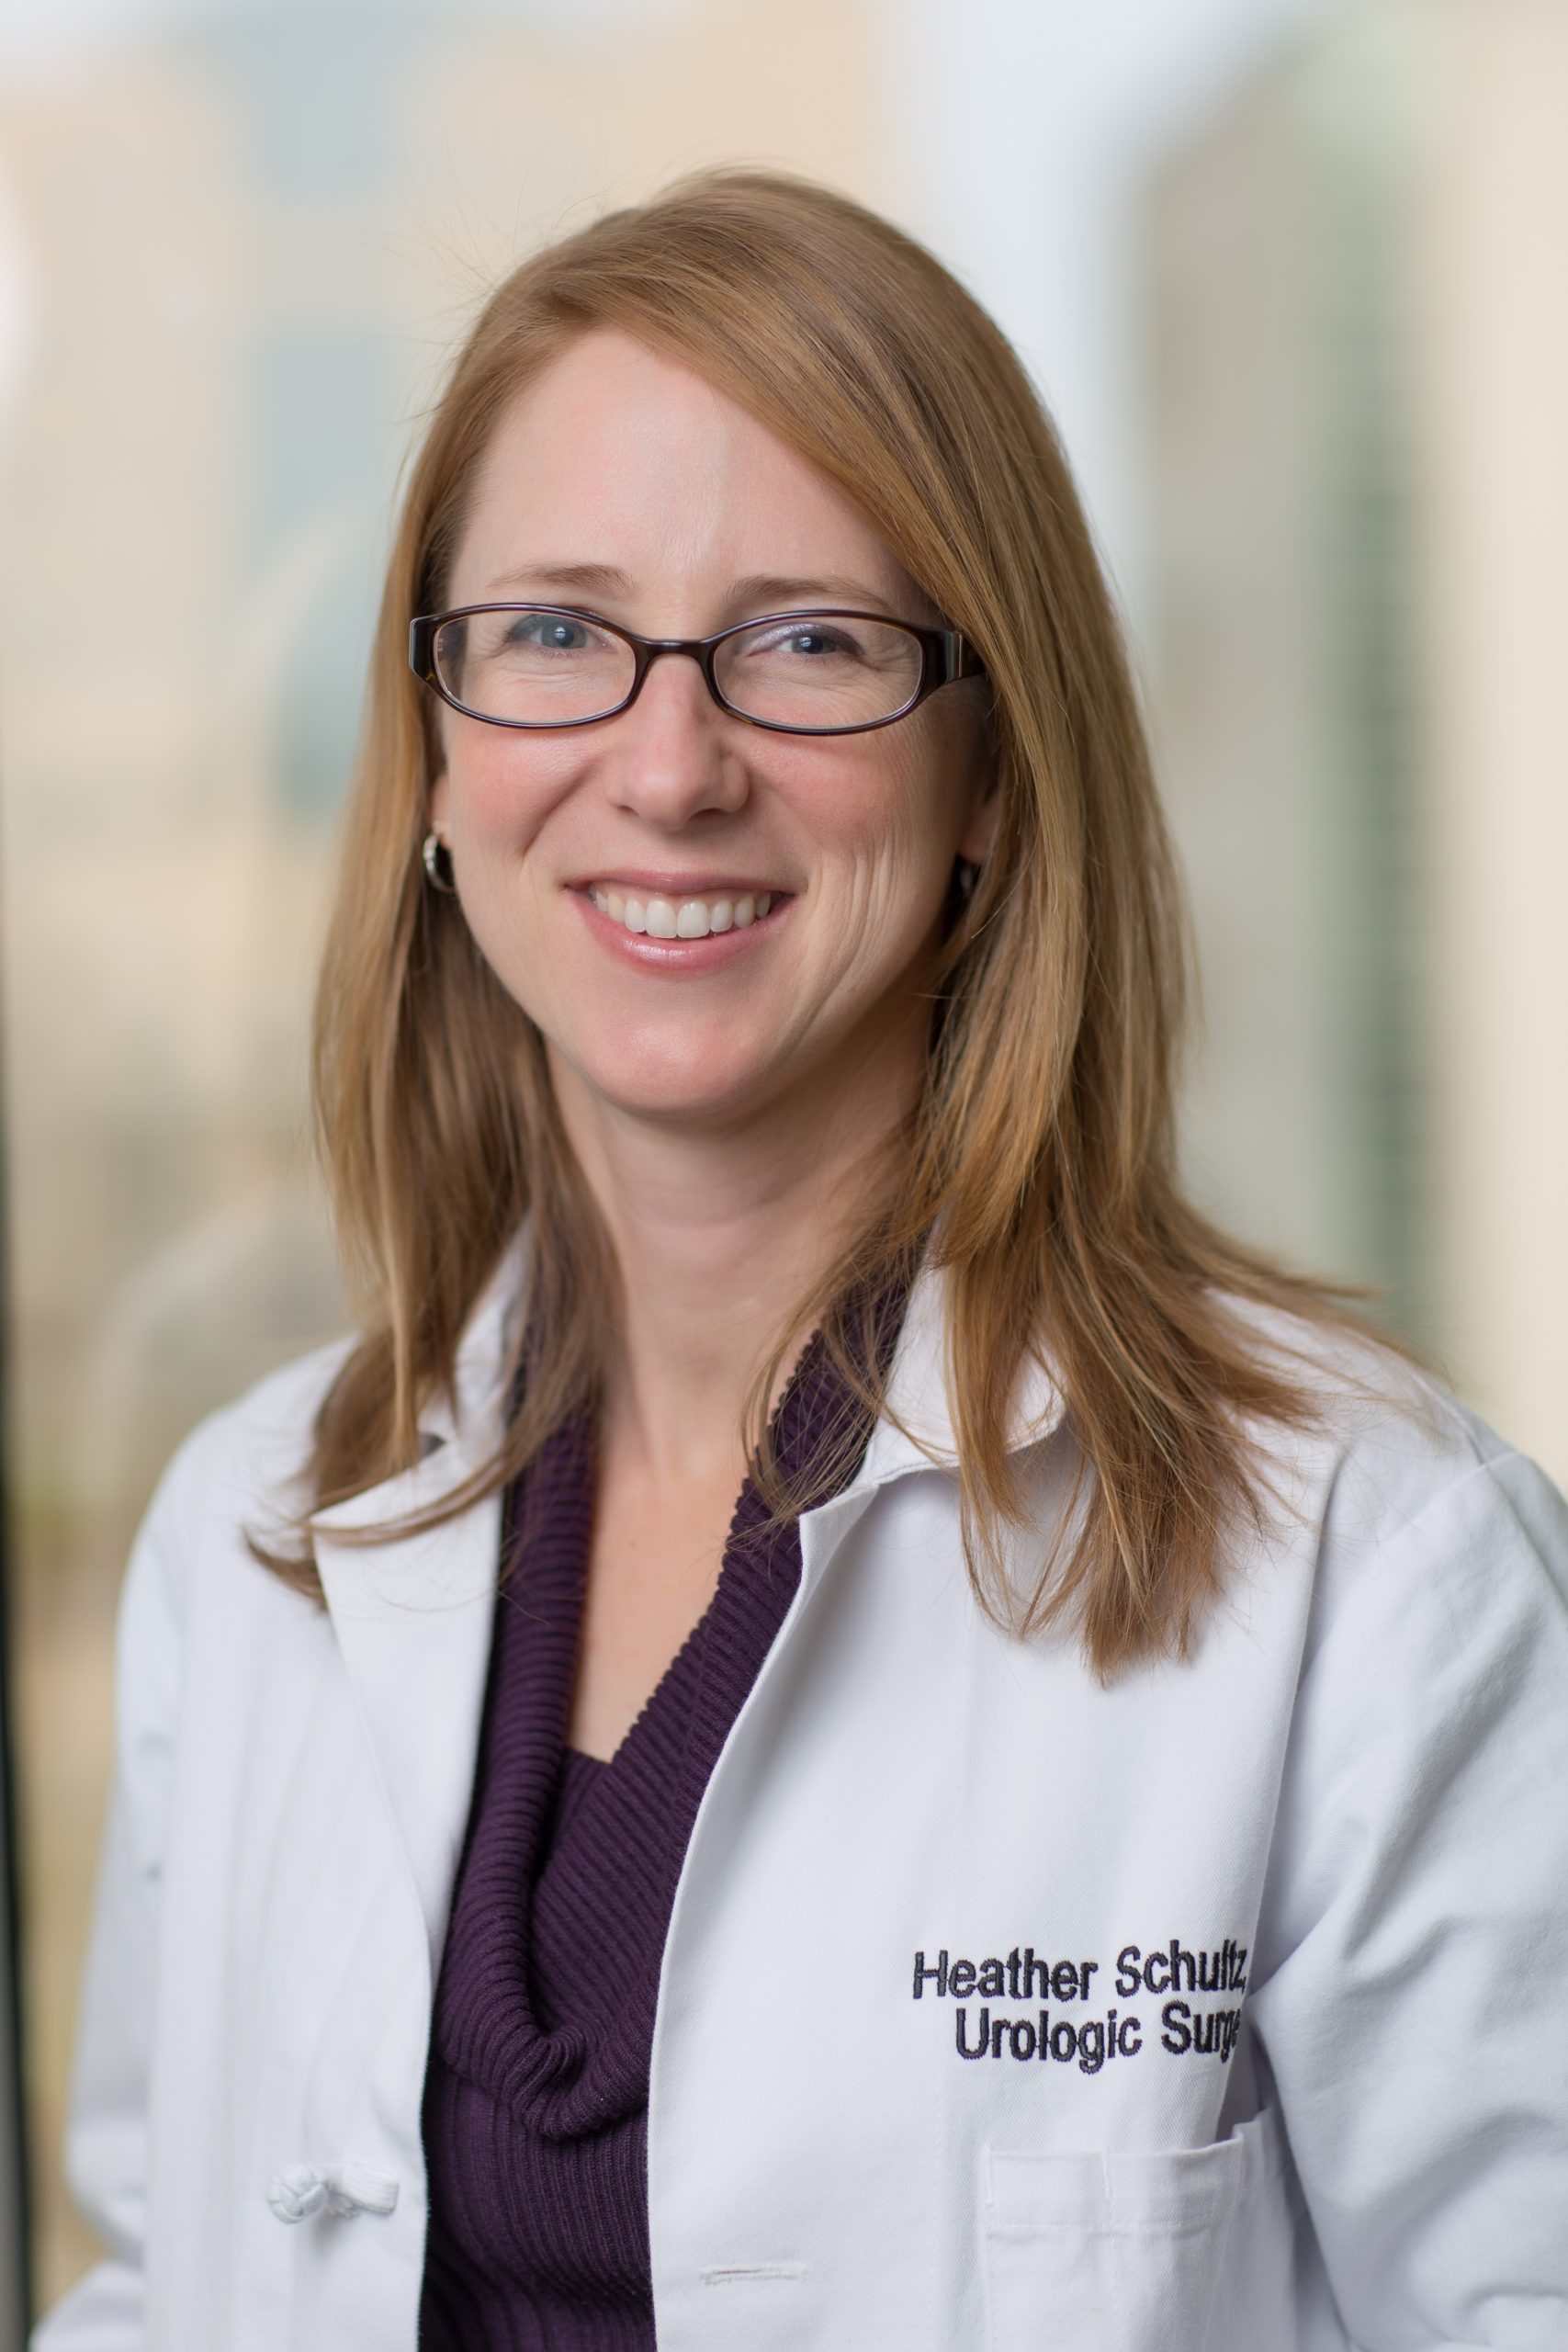 Heather Schultz, FNP-C, MSN Inducted into Fellows Association of Urology Nurses and Associates (FAUNA)